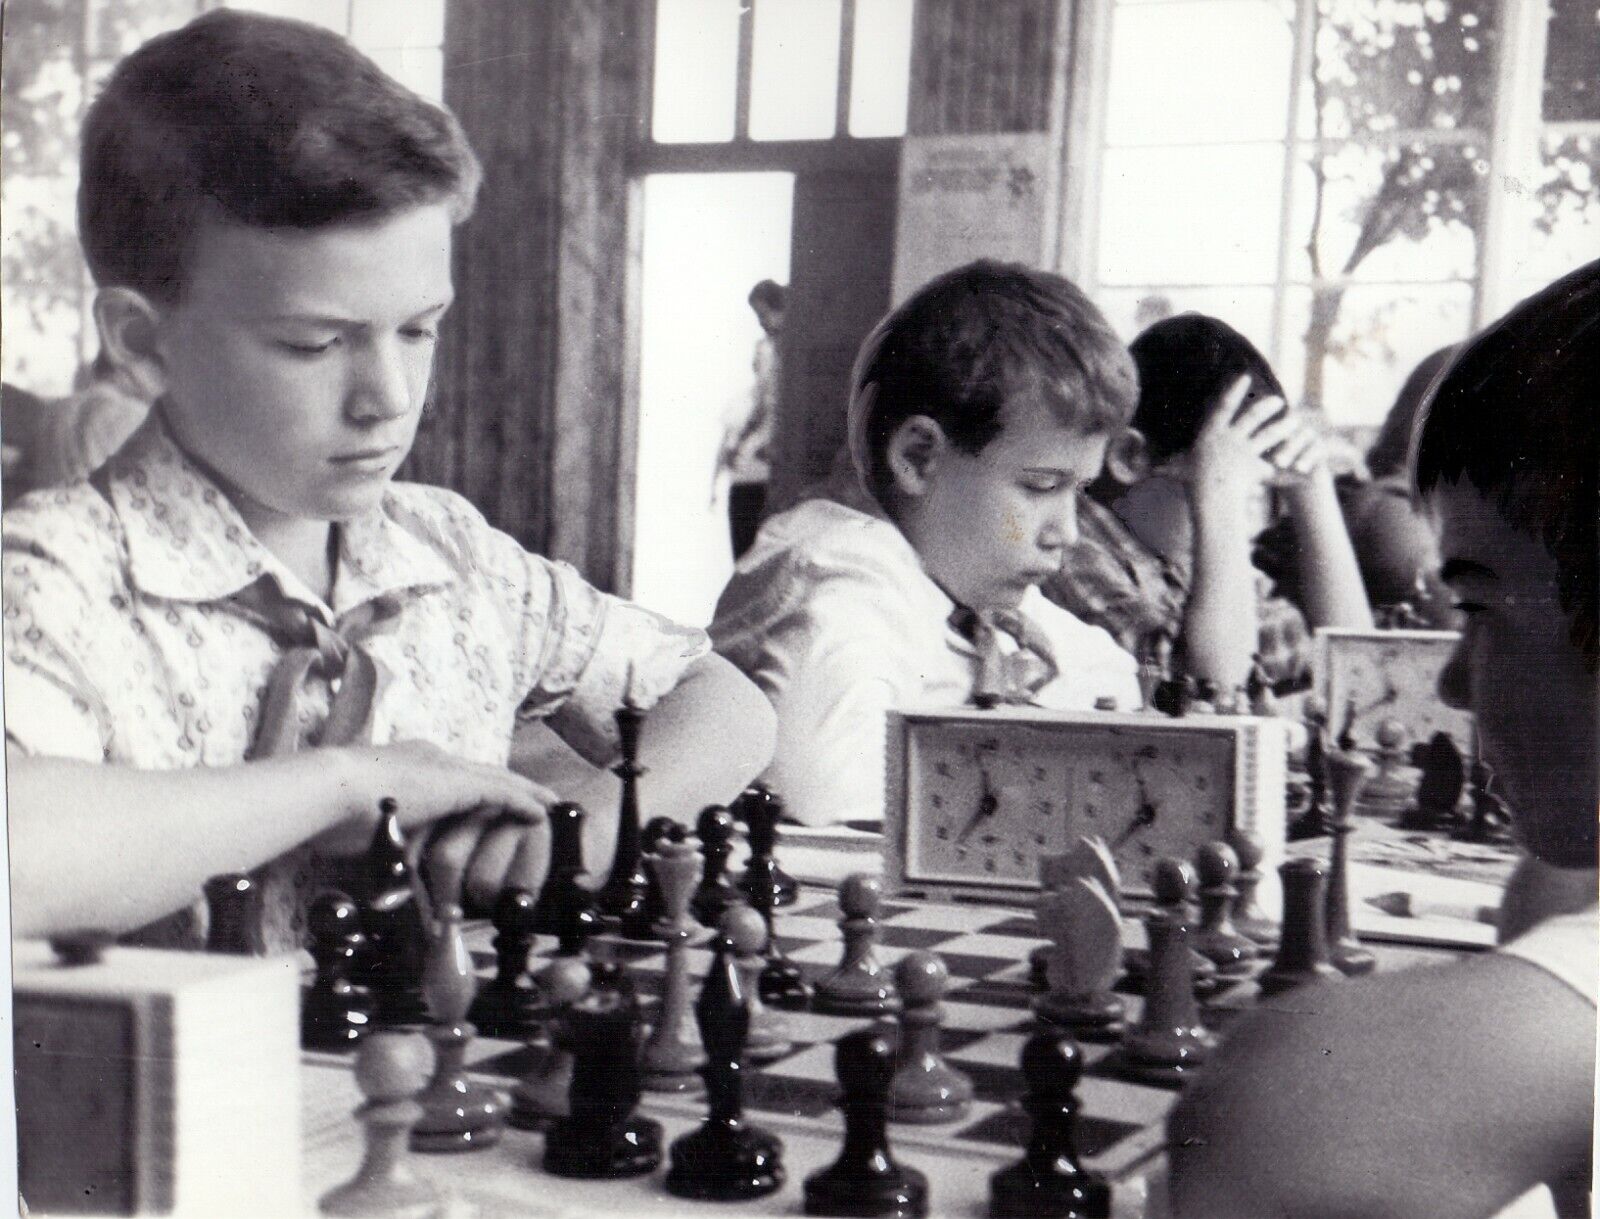 11759.Soviet Chess Photo: Children's chess 4 photos of 1970s by Dubeykovsky